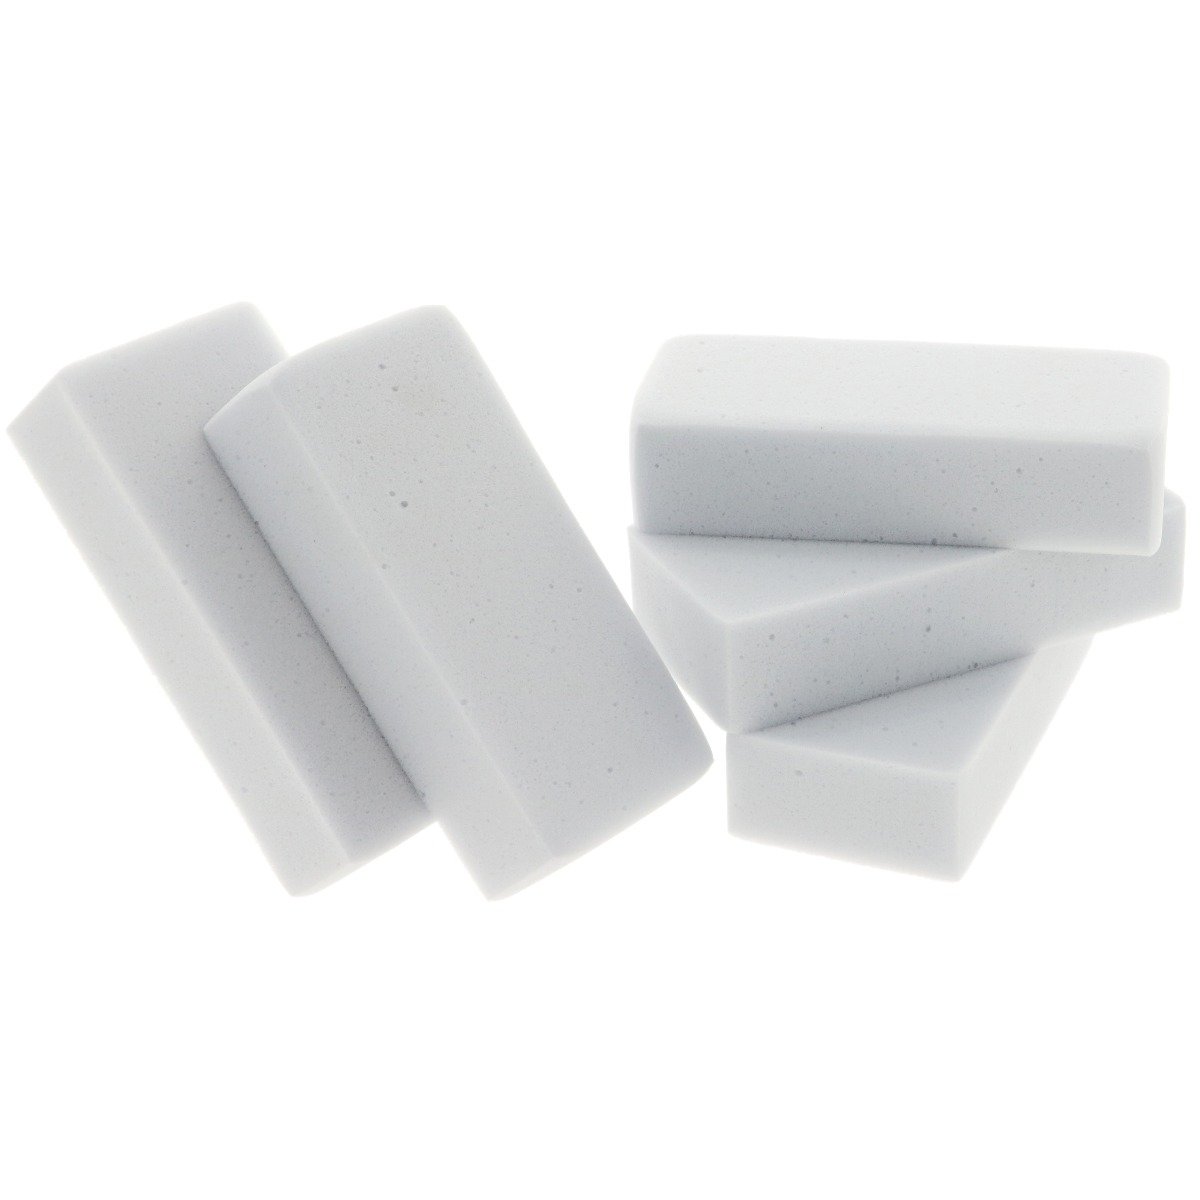 Dirt Eraser Pad - 5-pack